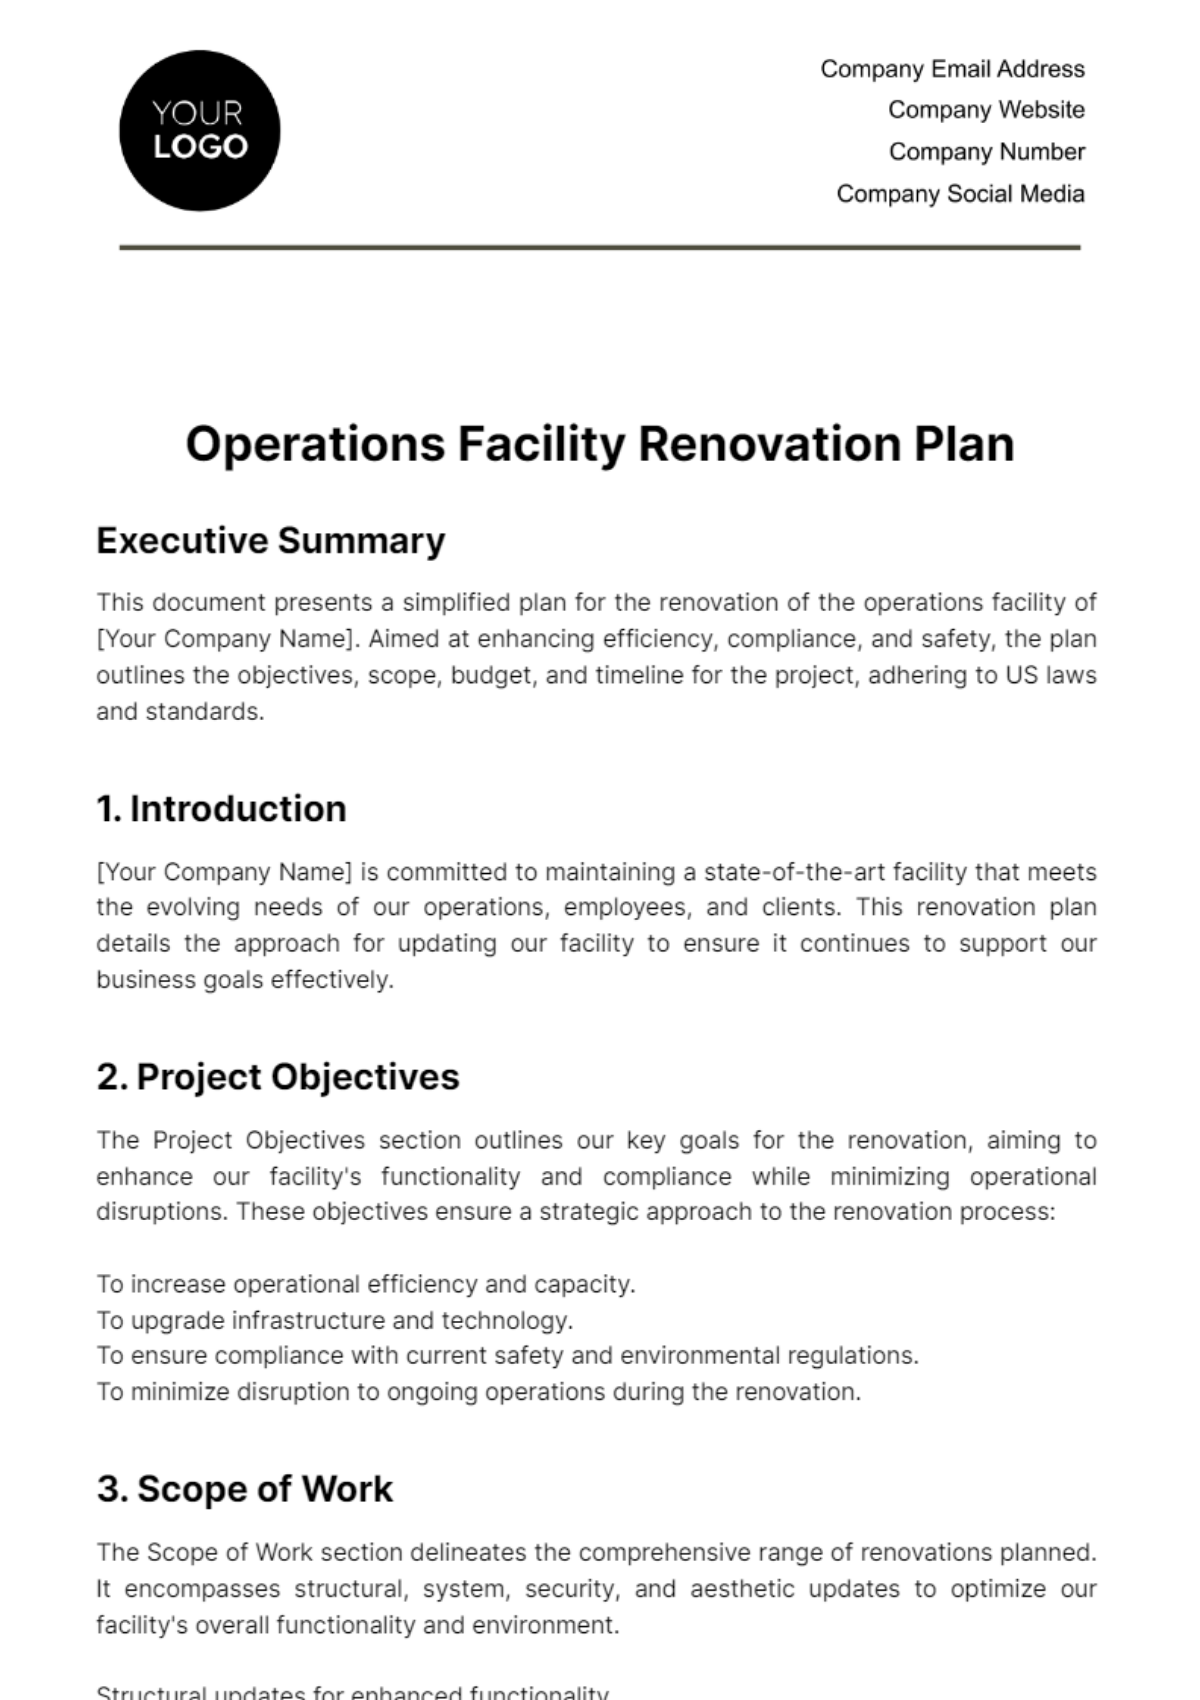 Operations Facility Renovation Plan Template